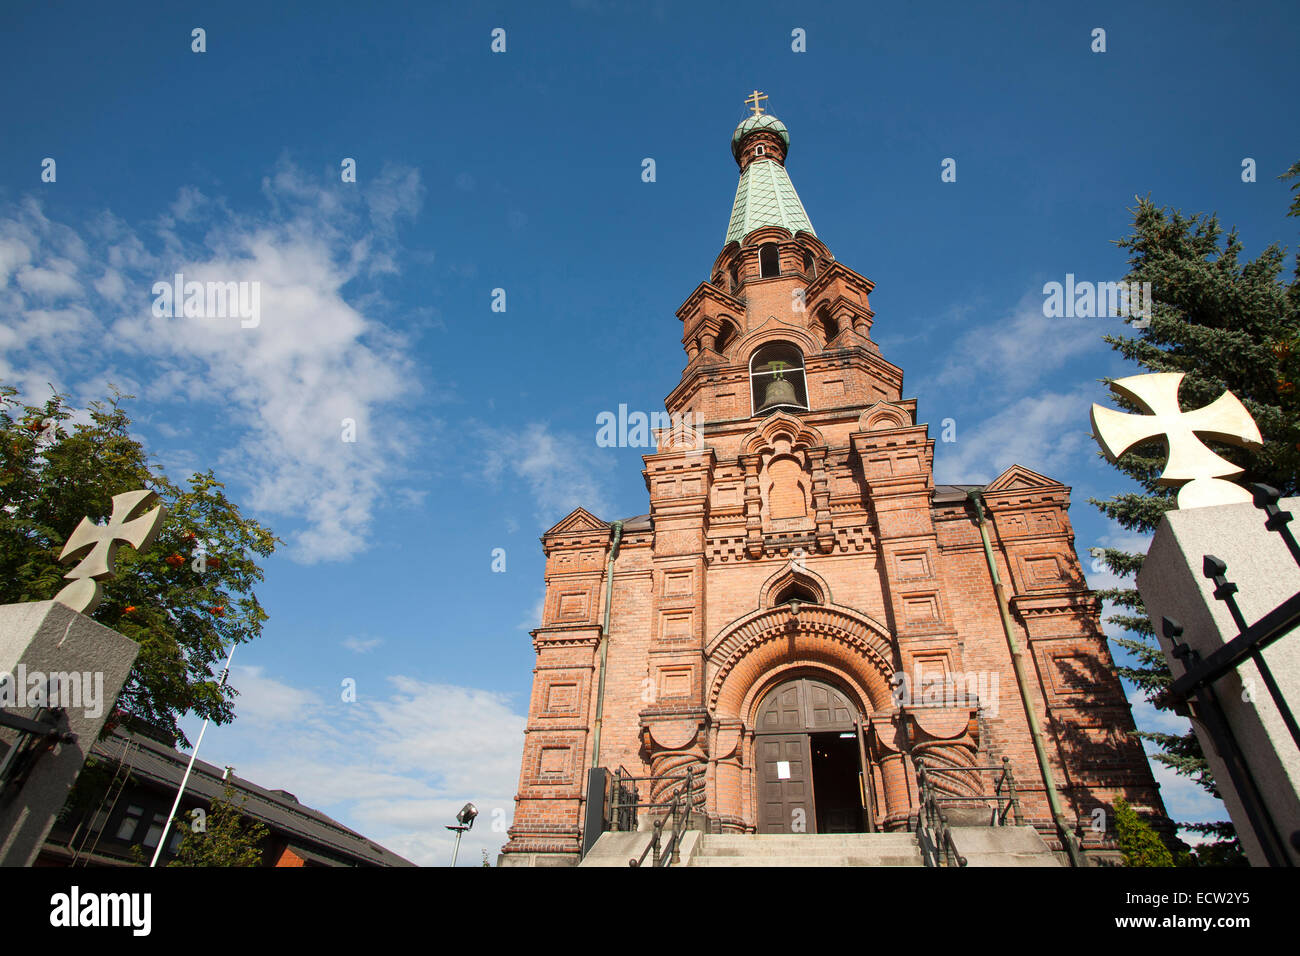 L'église orthodoxe, Tampere, Finlande, Europe Banque D'Images